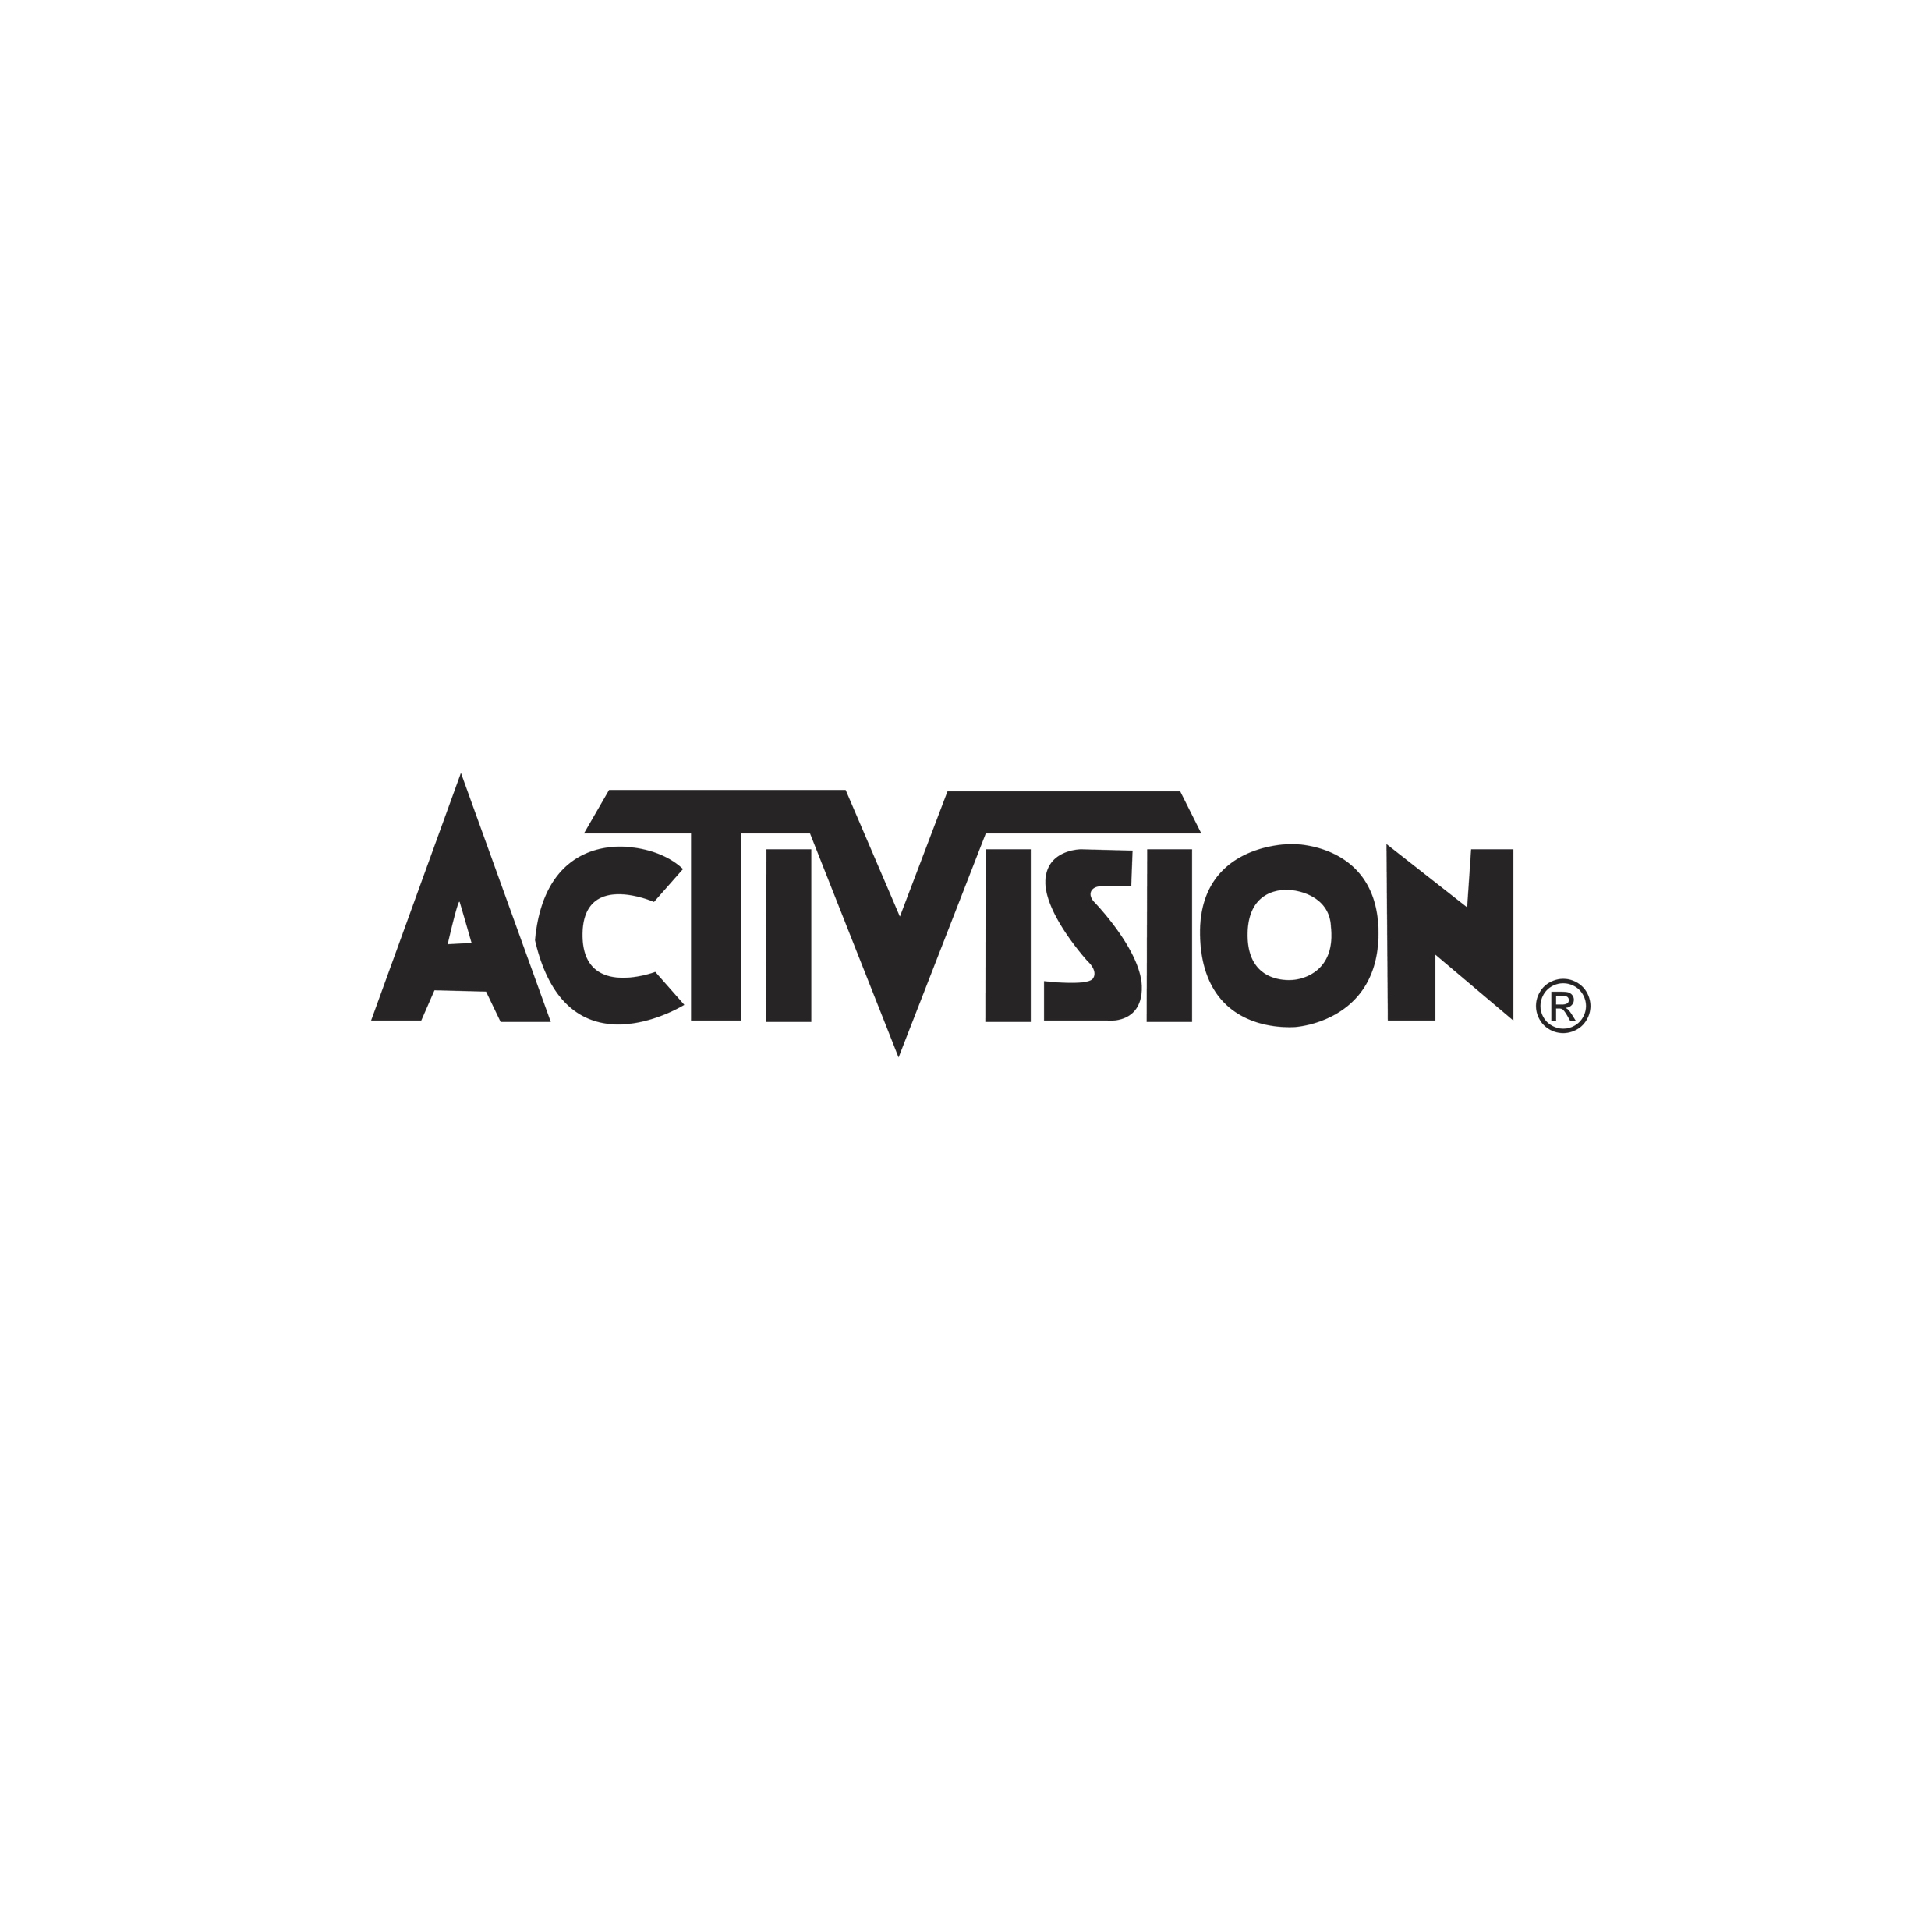 Activision_web_prepped_logo.jpg